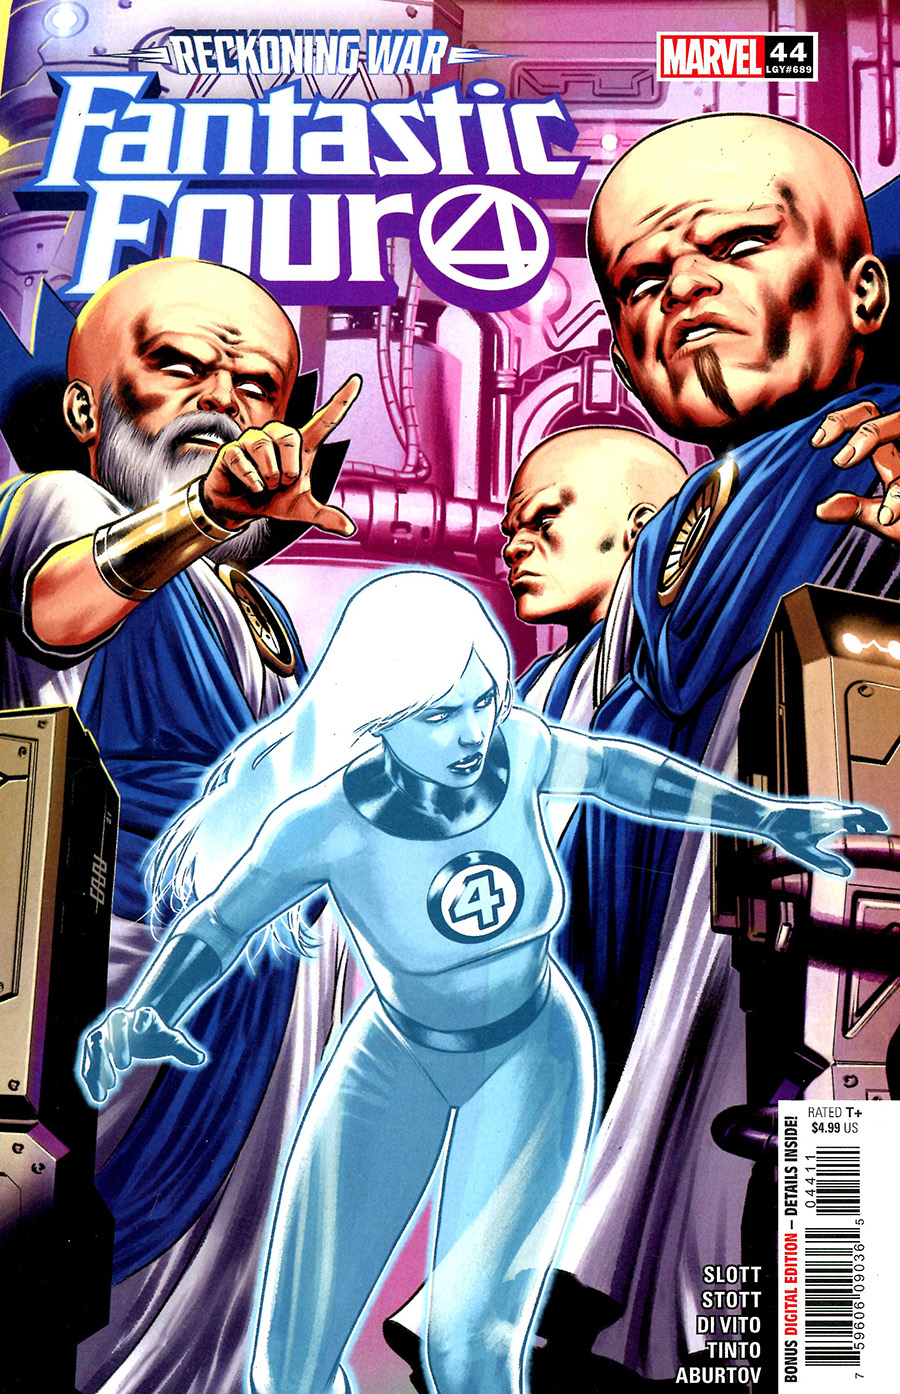 Fantastic Four Vol 6 #44 Cover A Regular CAFU Cover (Reckoning War Tie-In)